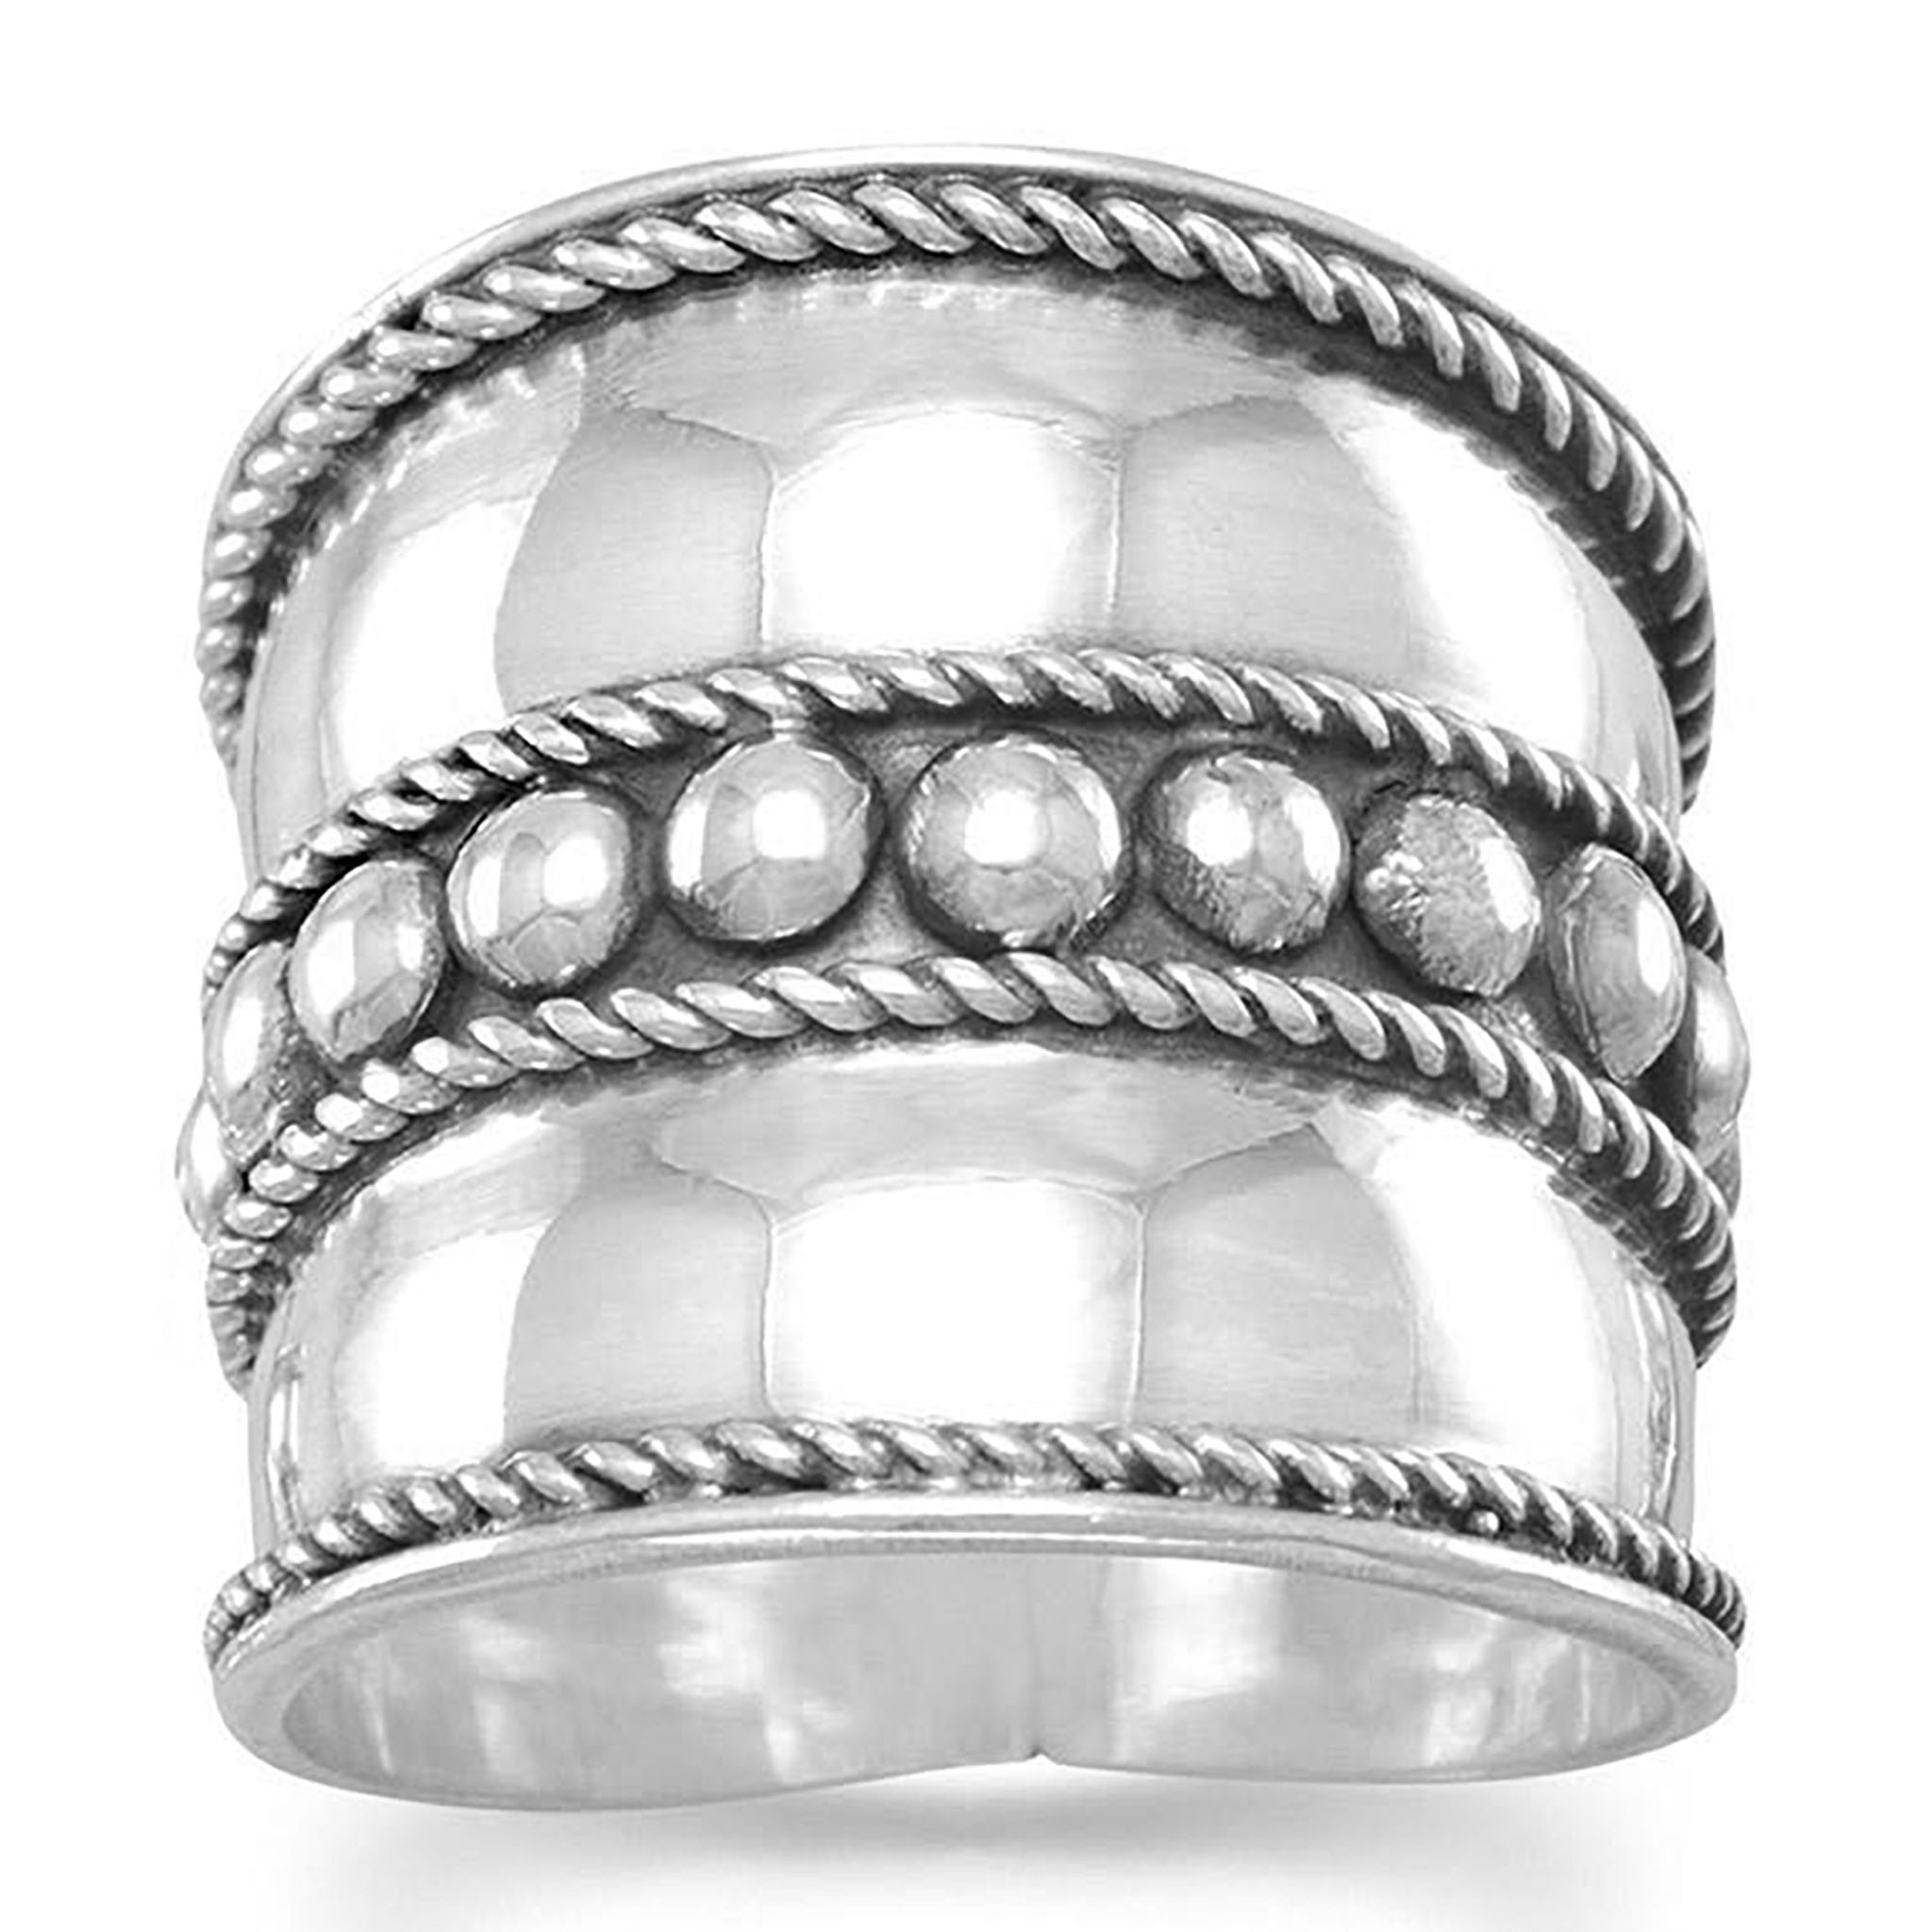 Bali Design Wide Band Ring